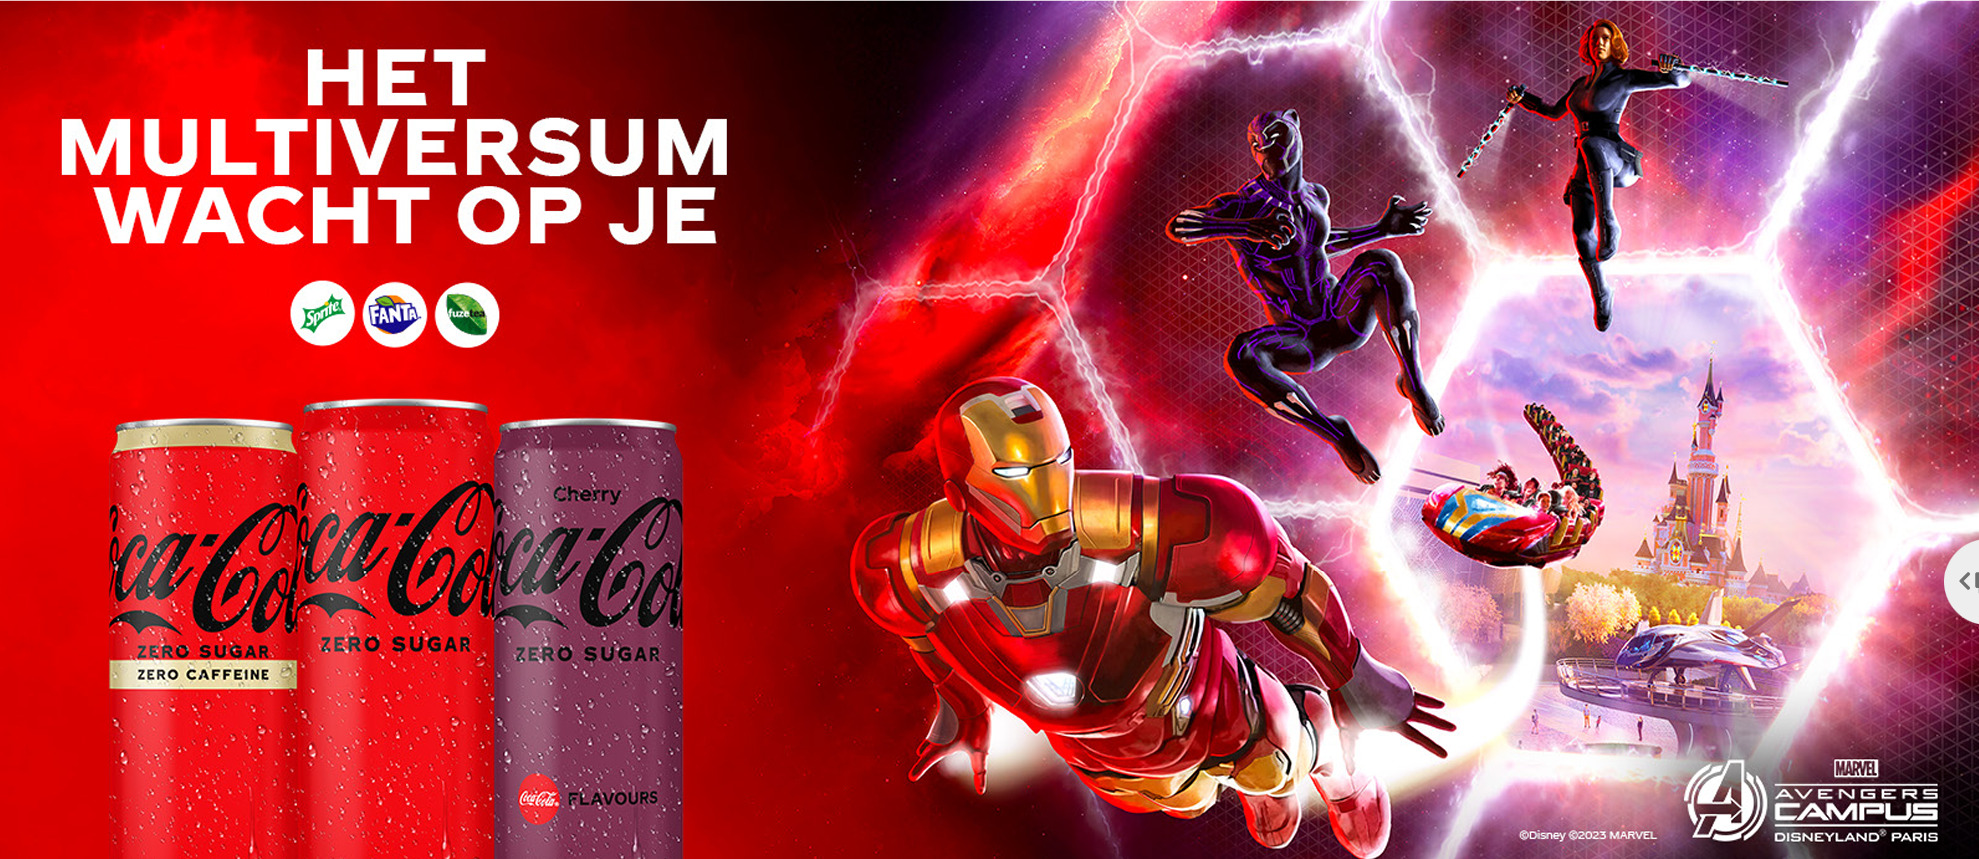 Coca-cola Marvel Multiverse screentime-campagne